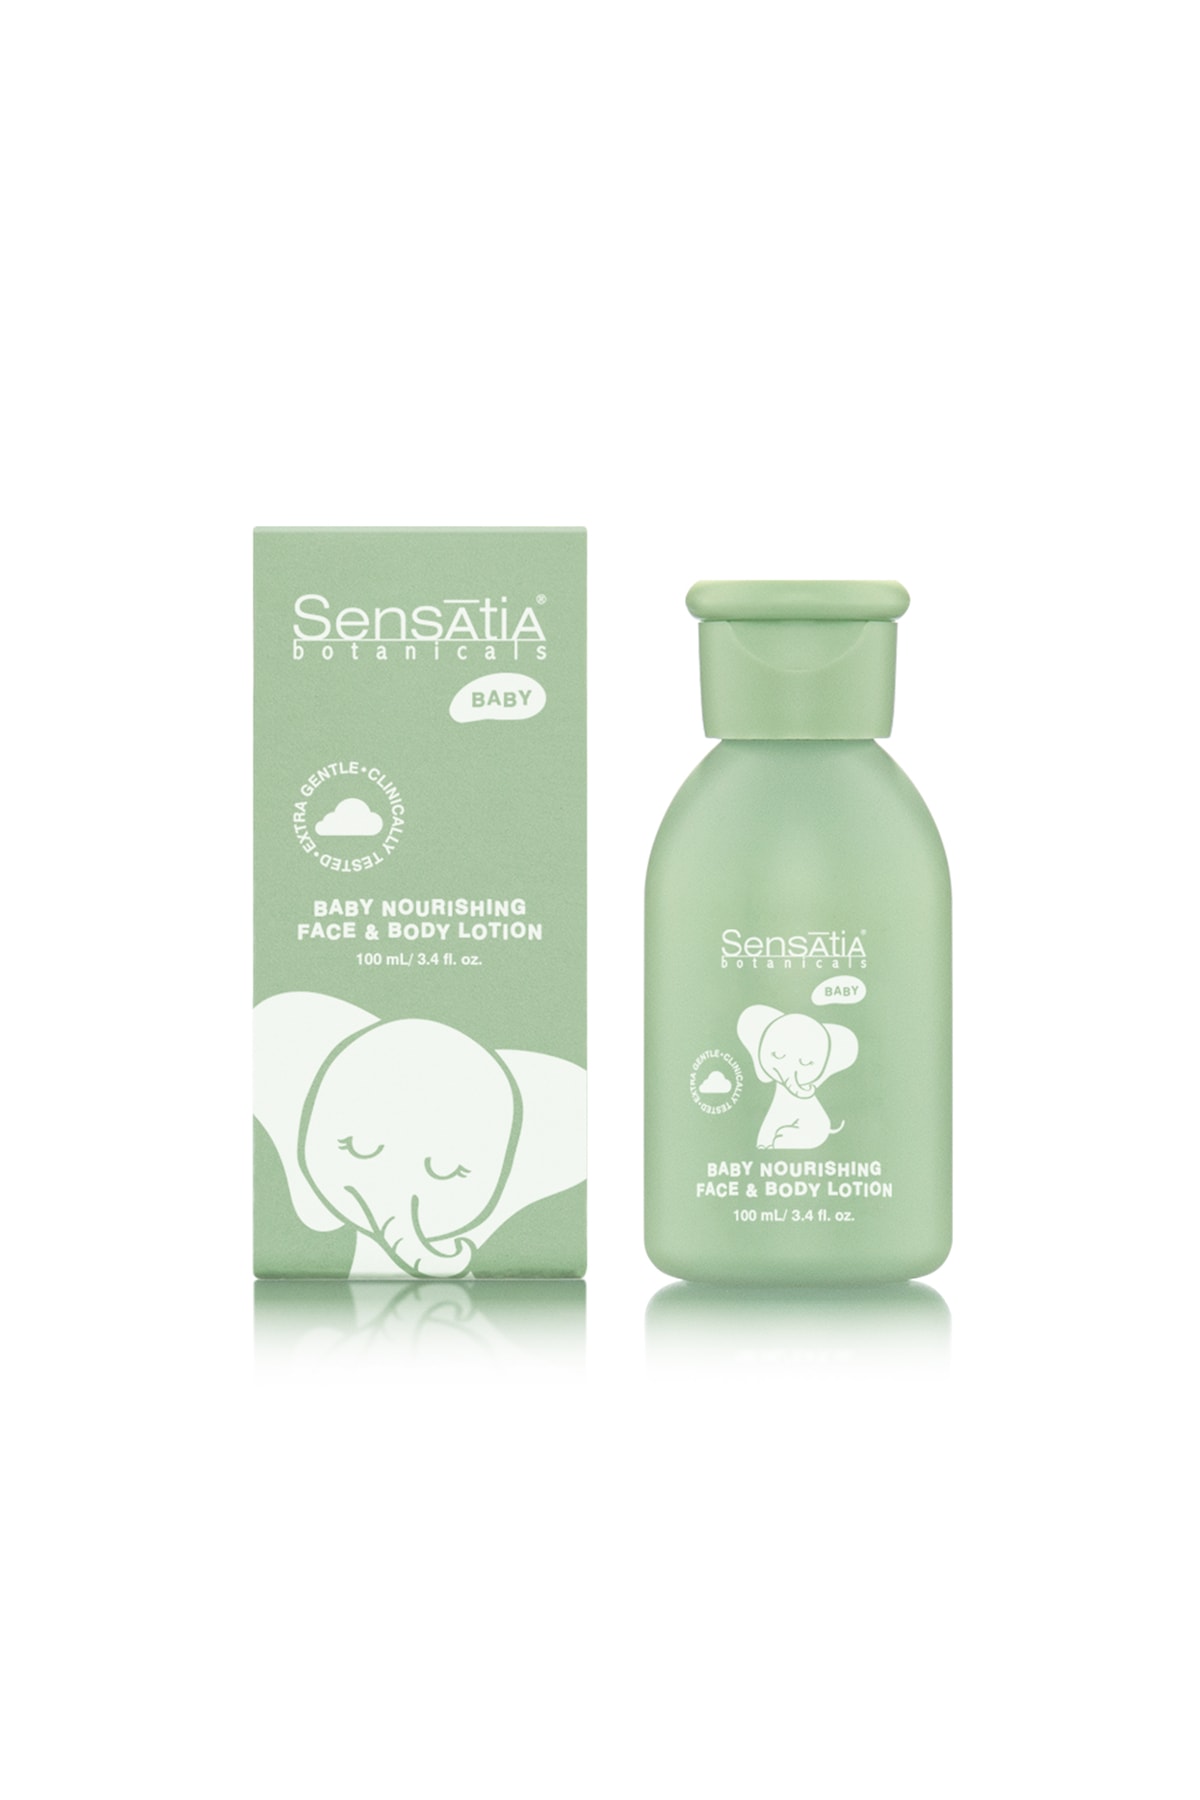 Sensatia Botanicals Baby Nourishing Face&body Lotion Cream-100ml